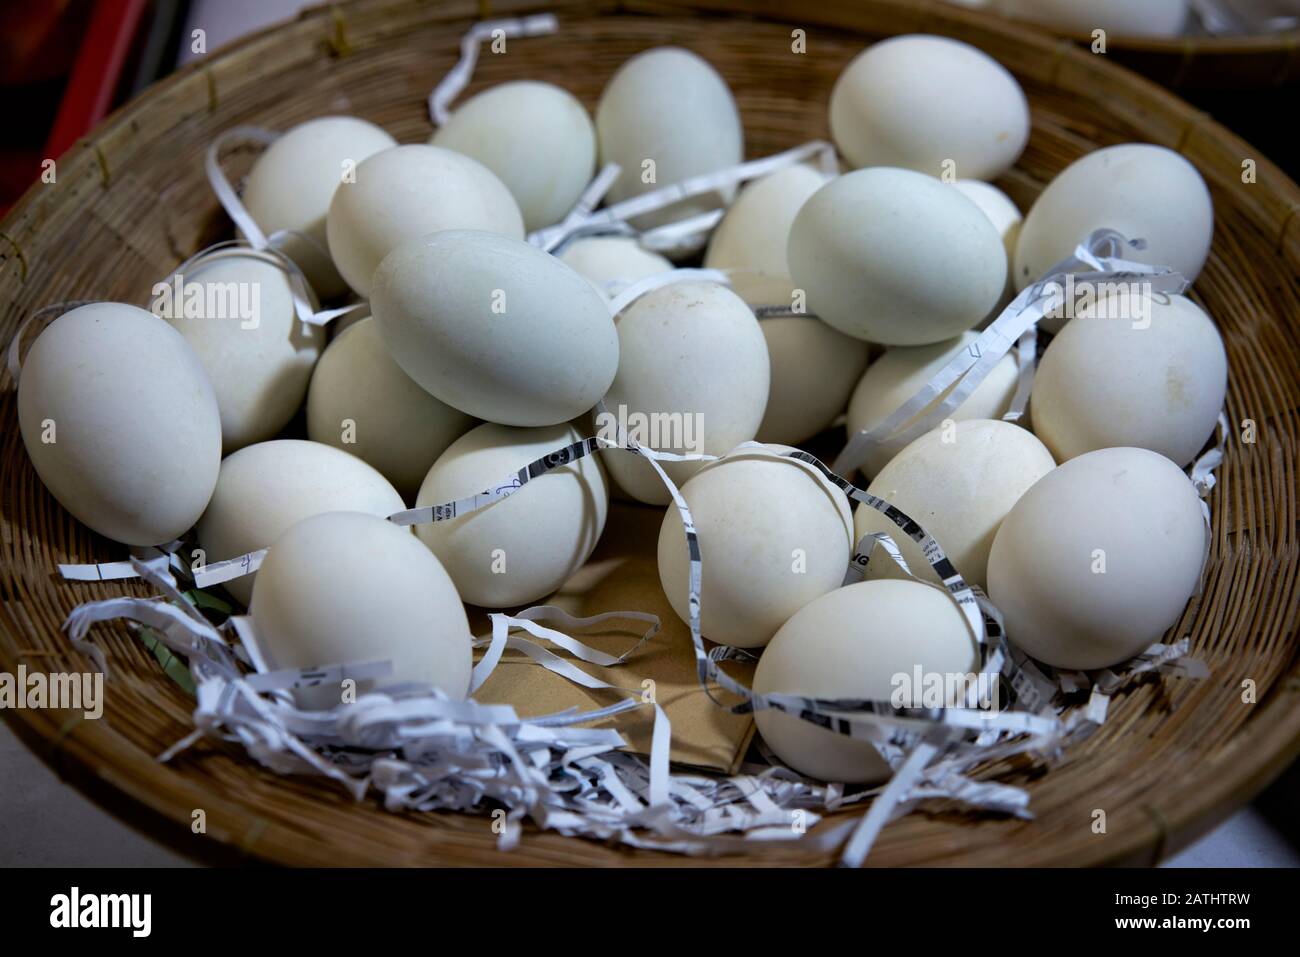 Basket of eggs, White chicken eggs, Stock Photo